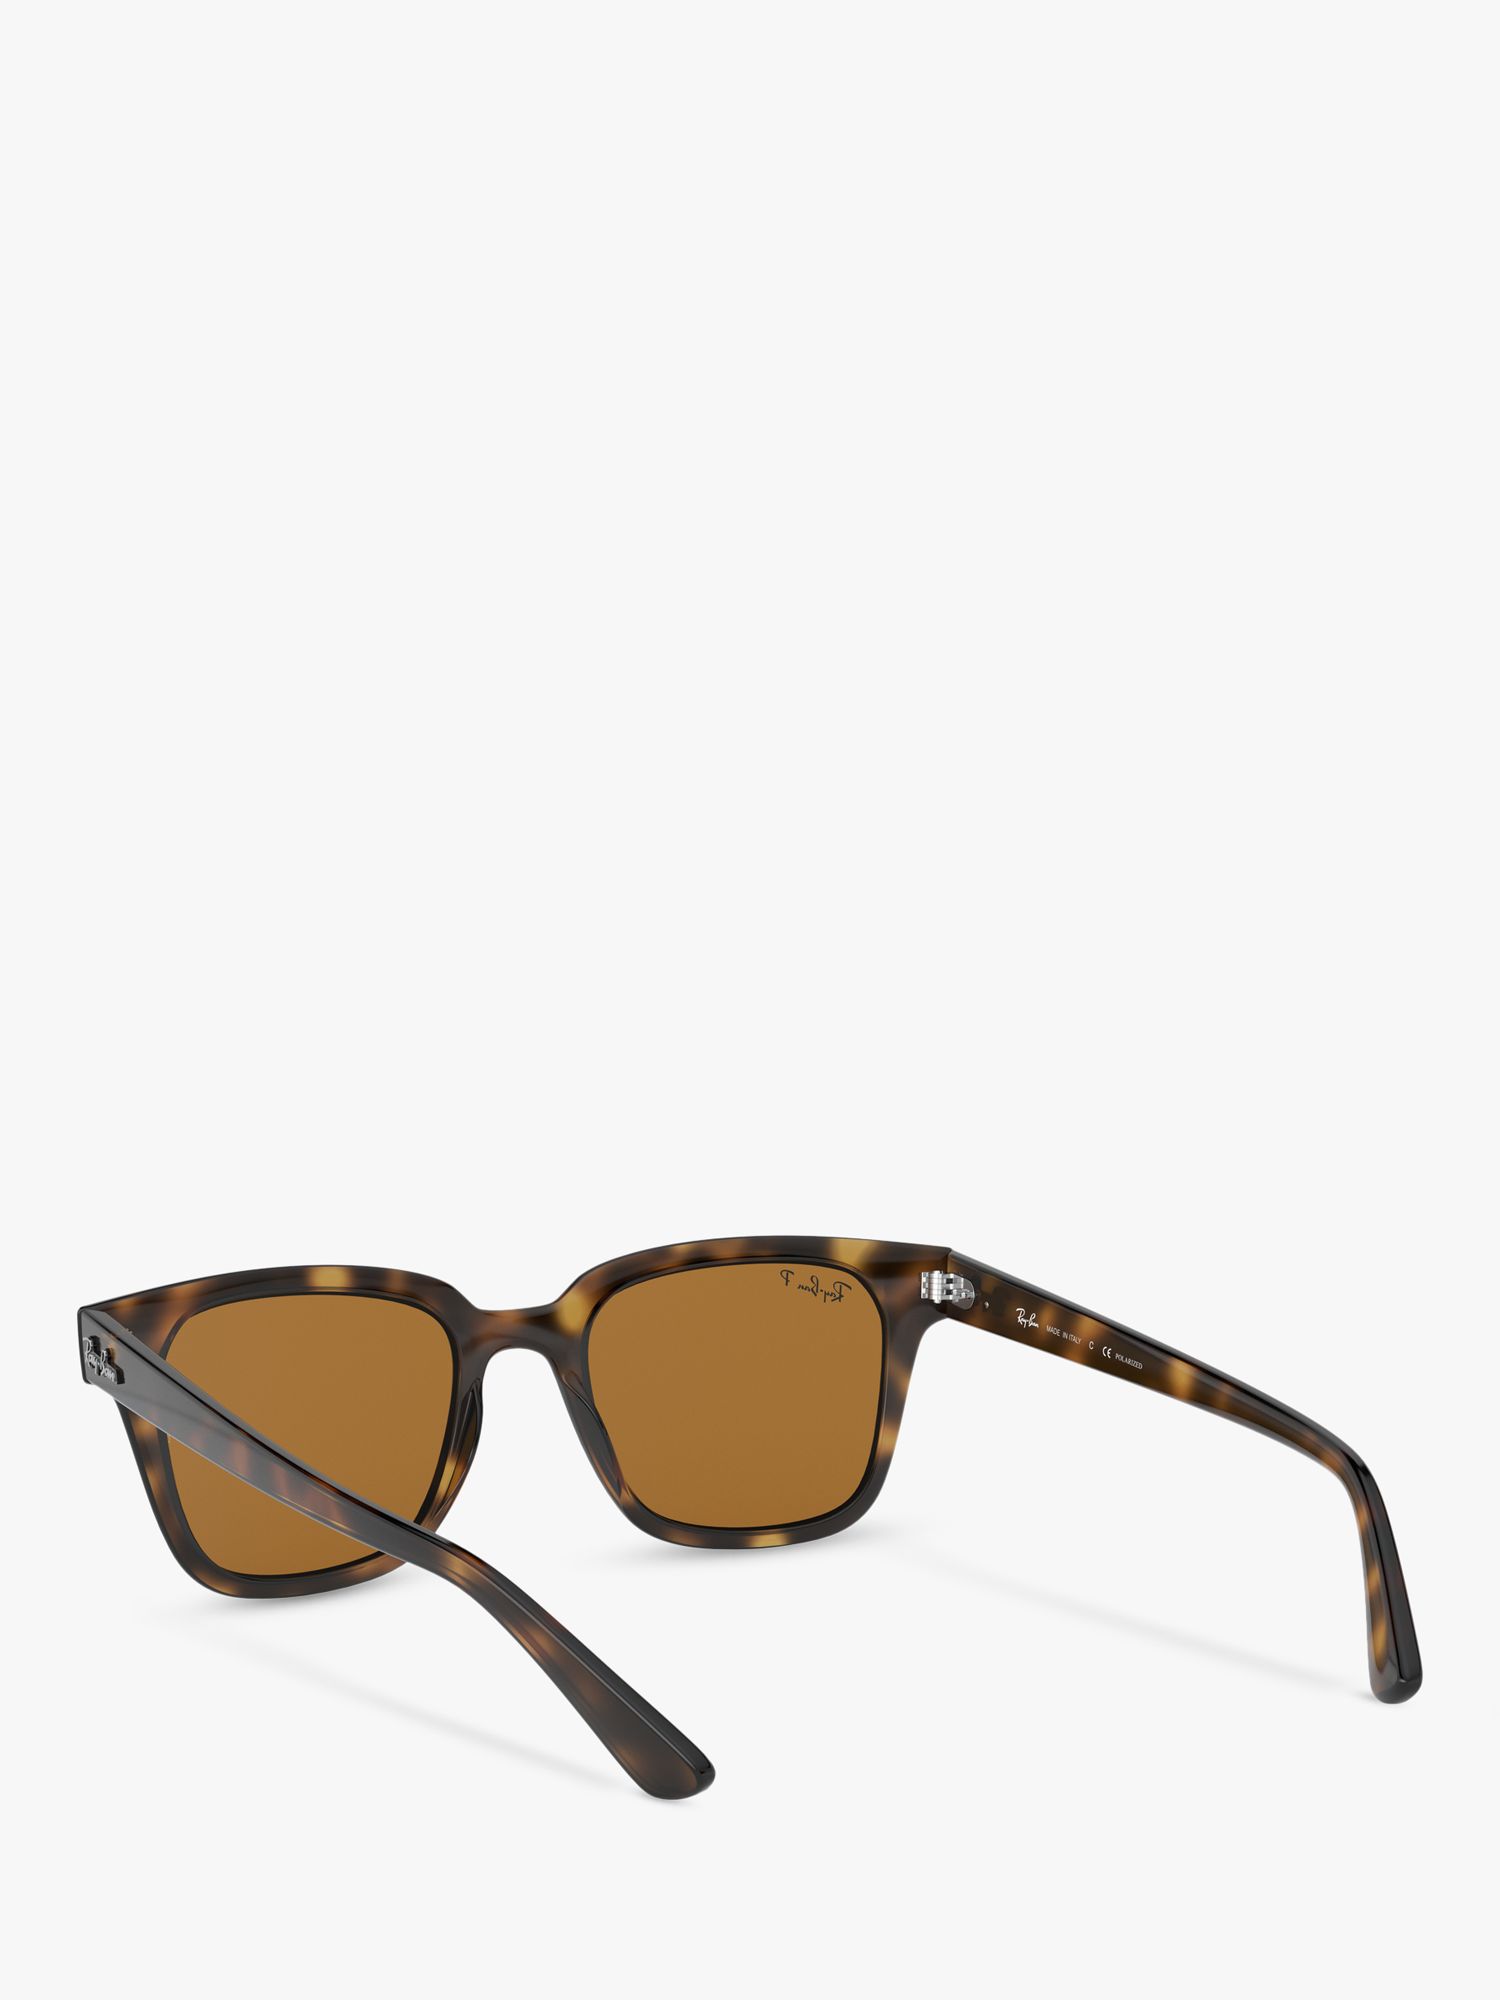 Buy Ray-Ban RB4323 Unisex Polarised Wayfarer Sunglasses Online at johnlewis.com